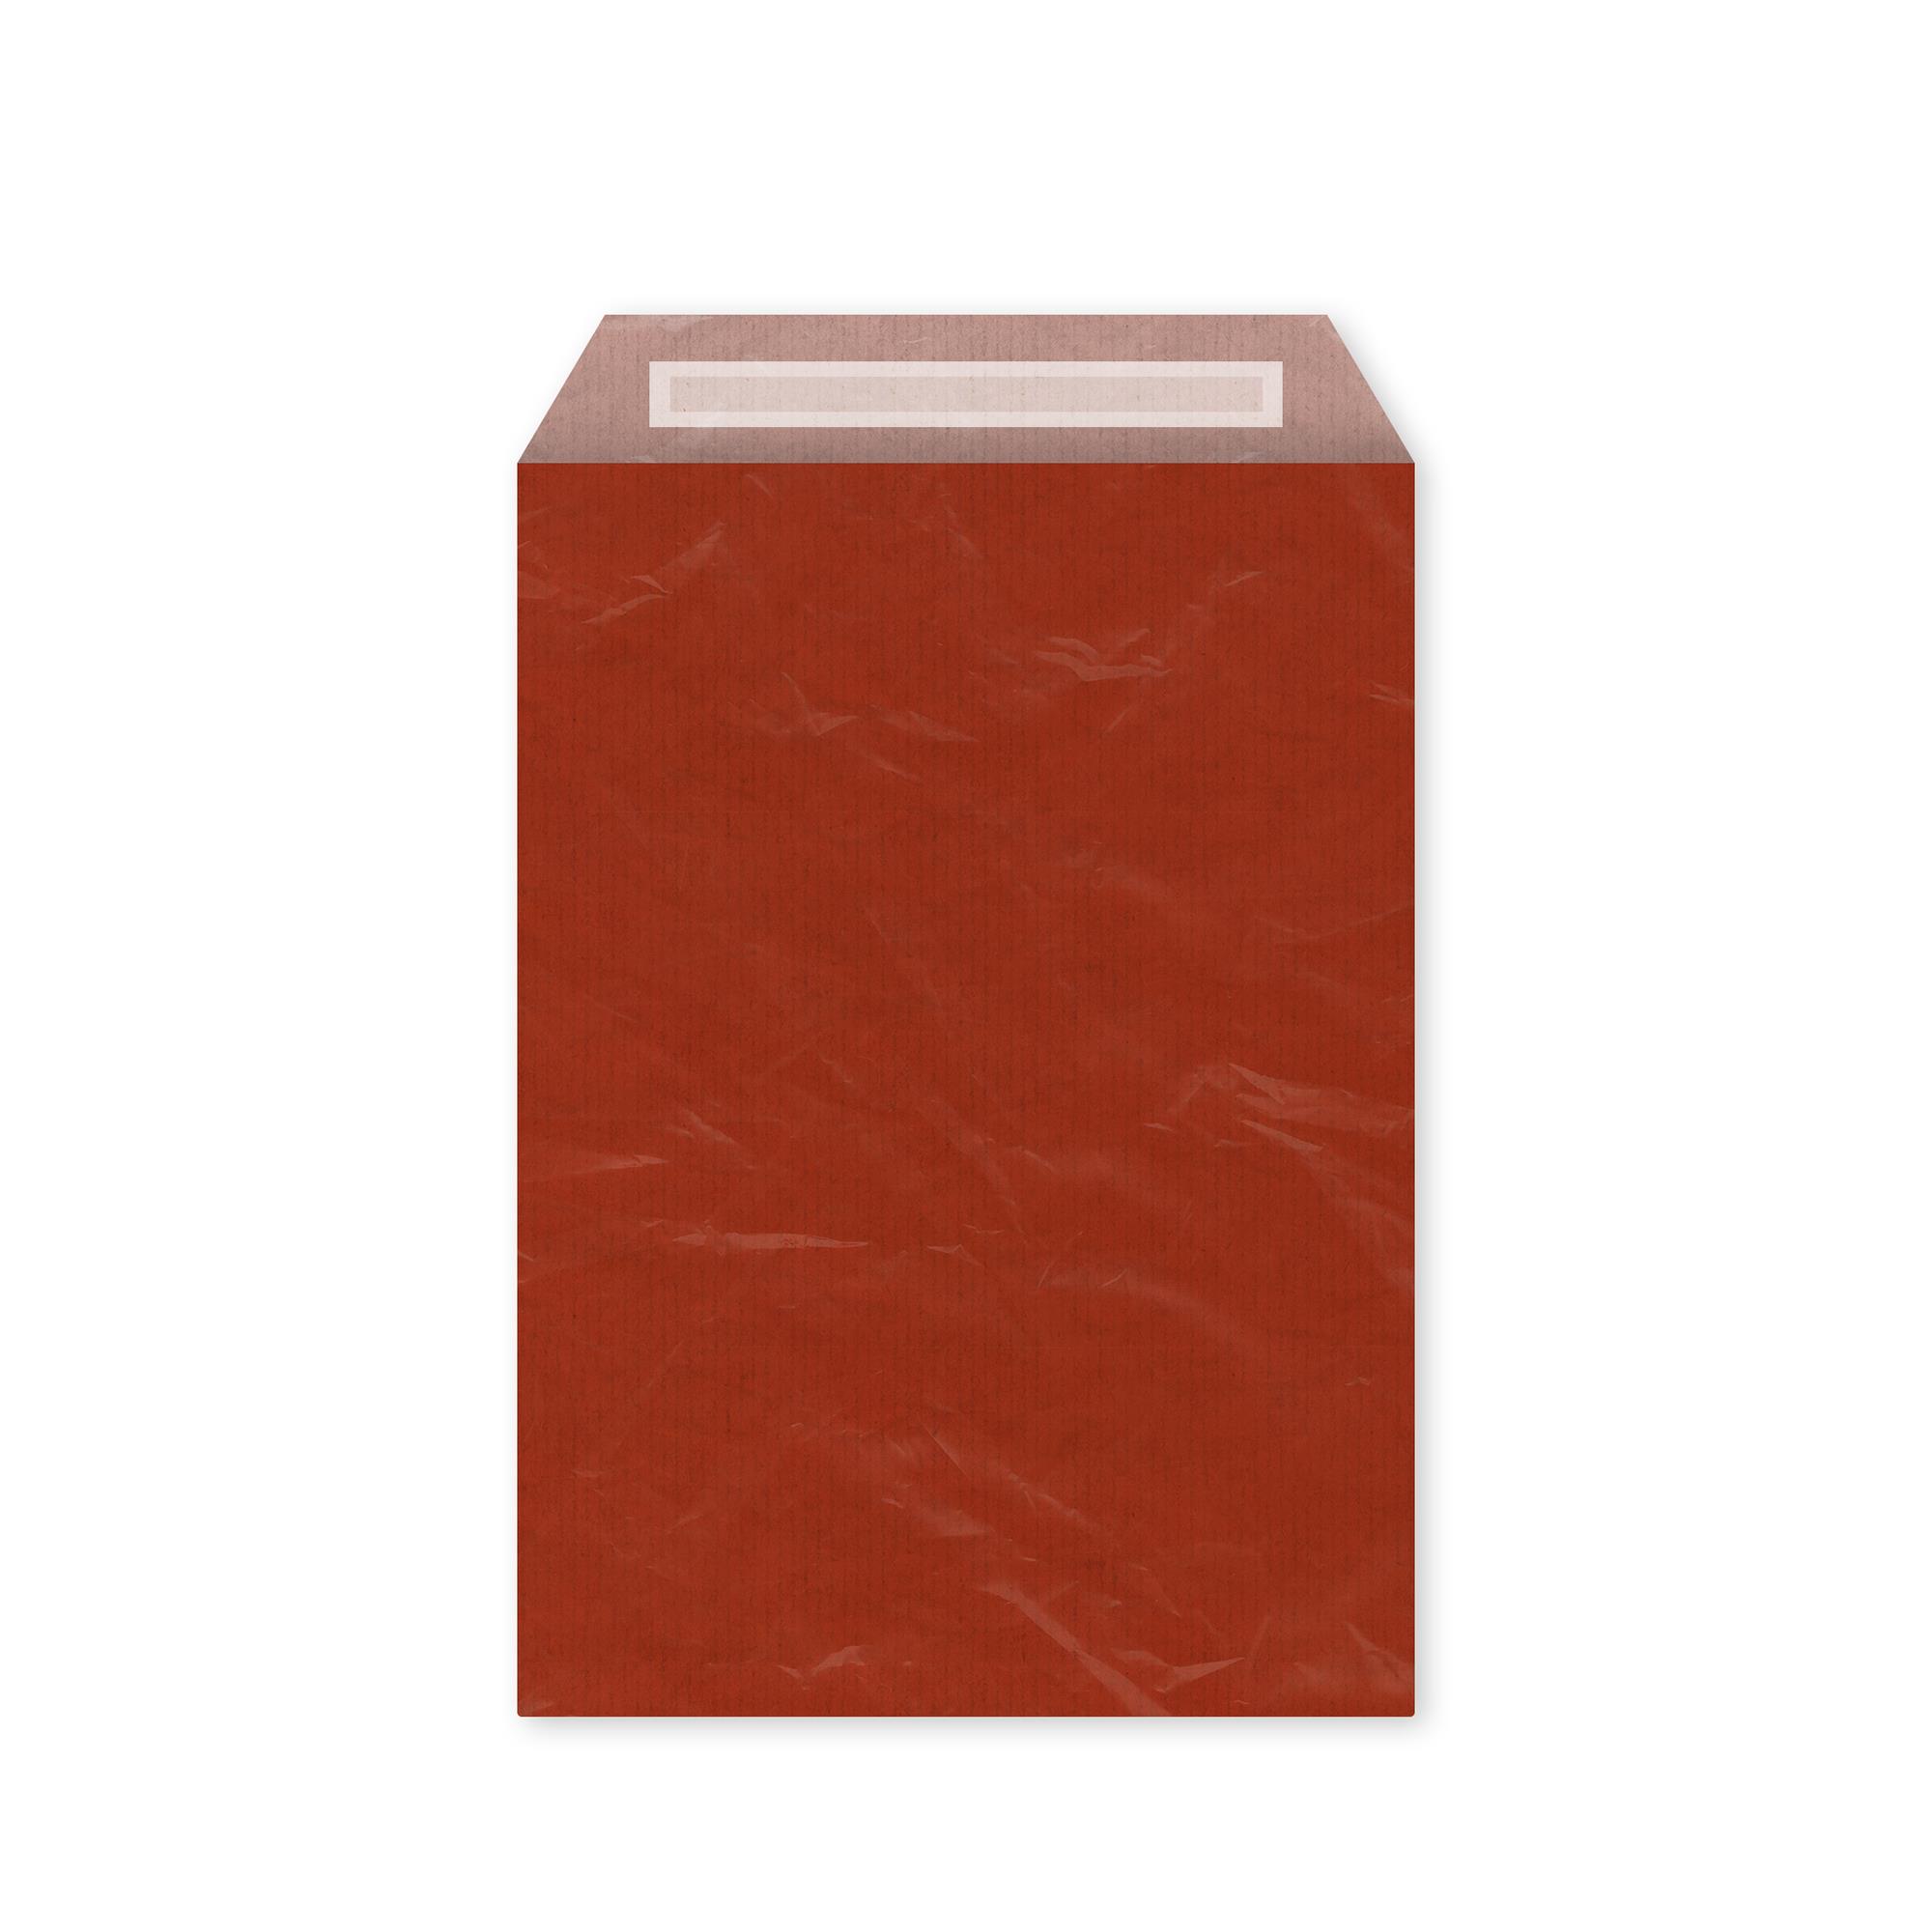 Bantlı Hediye Paketi Kağıt Kırmızı 25x6x30,5 cm - 25 Adet